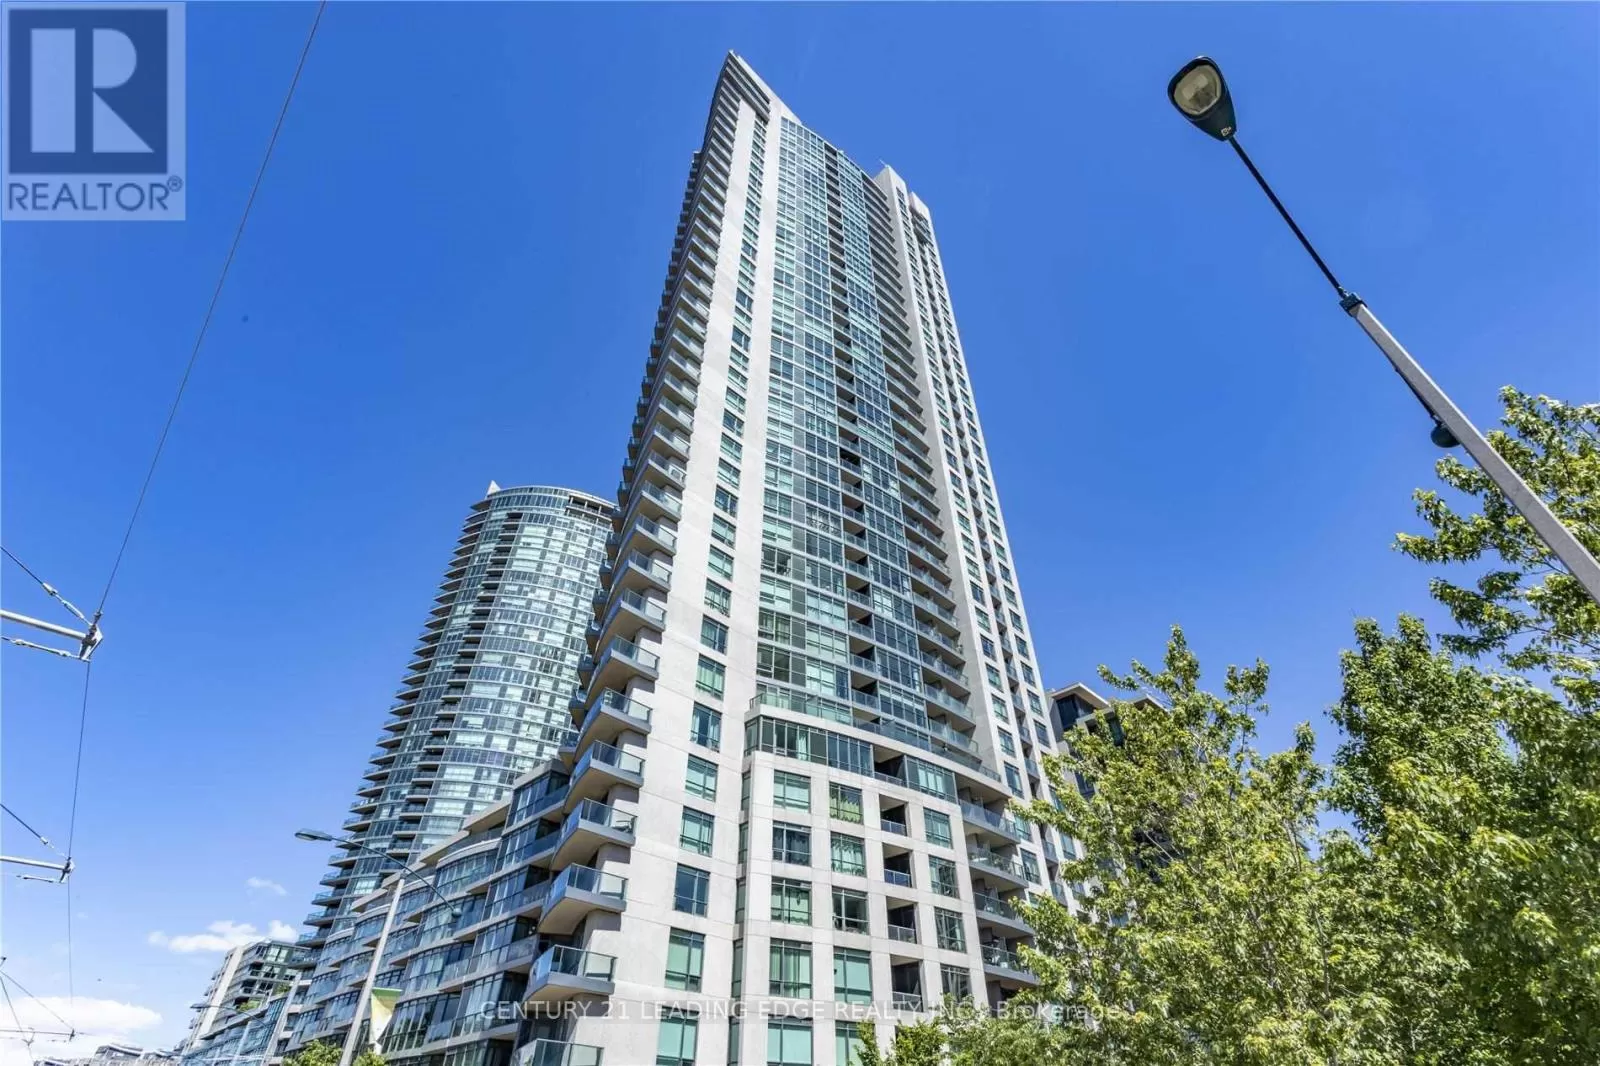 Apartment for rent: #911 -215 Fort York Blvd, Toronto, Ontario M5V 4A2